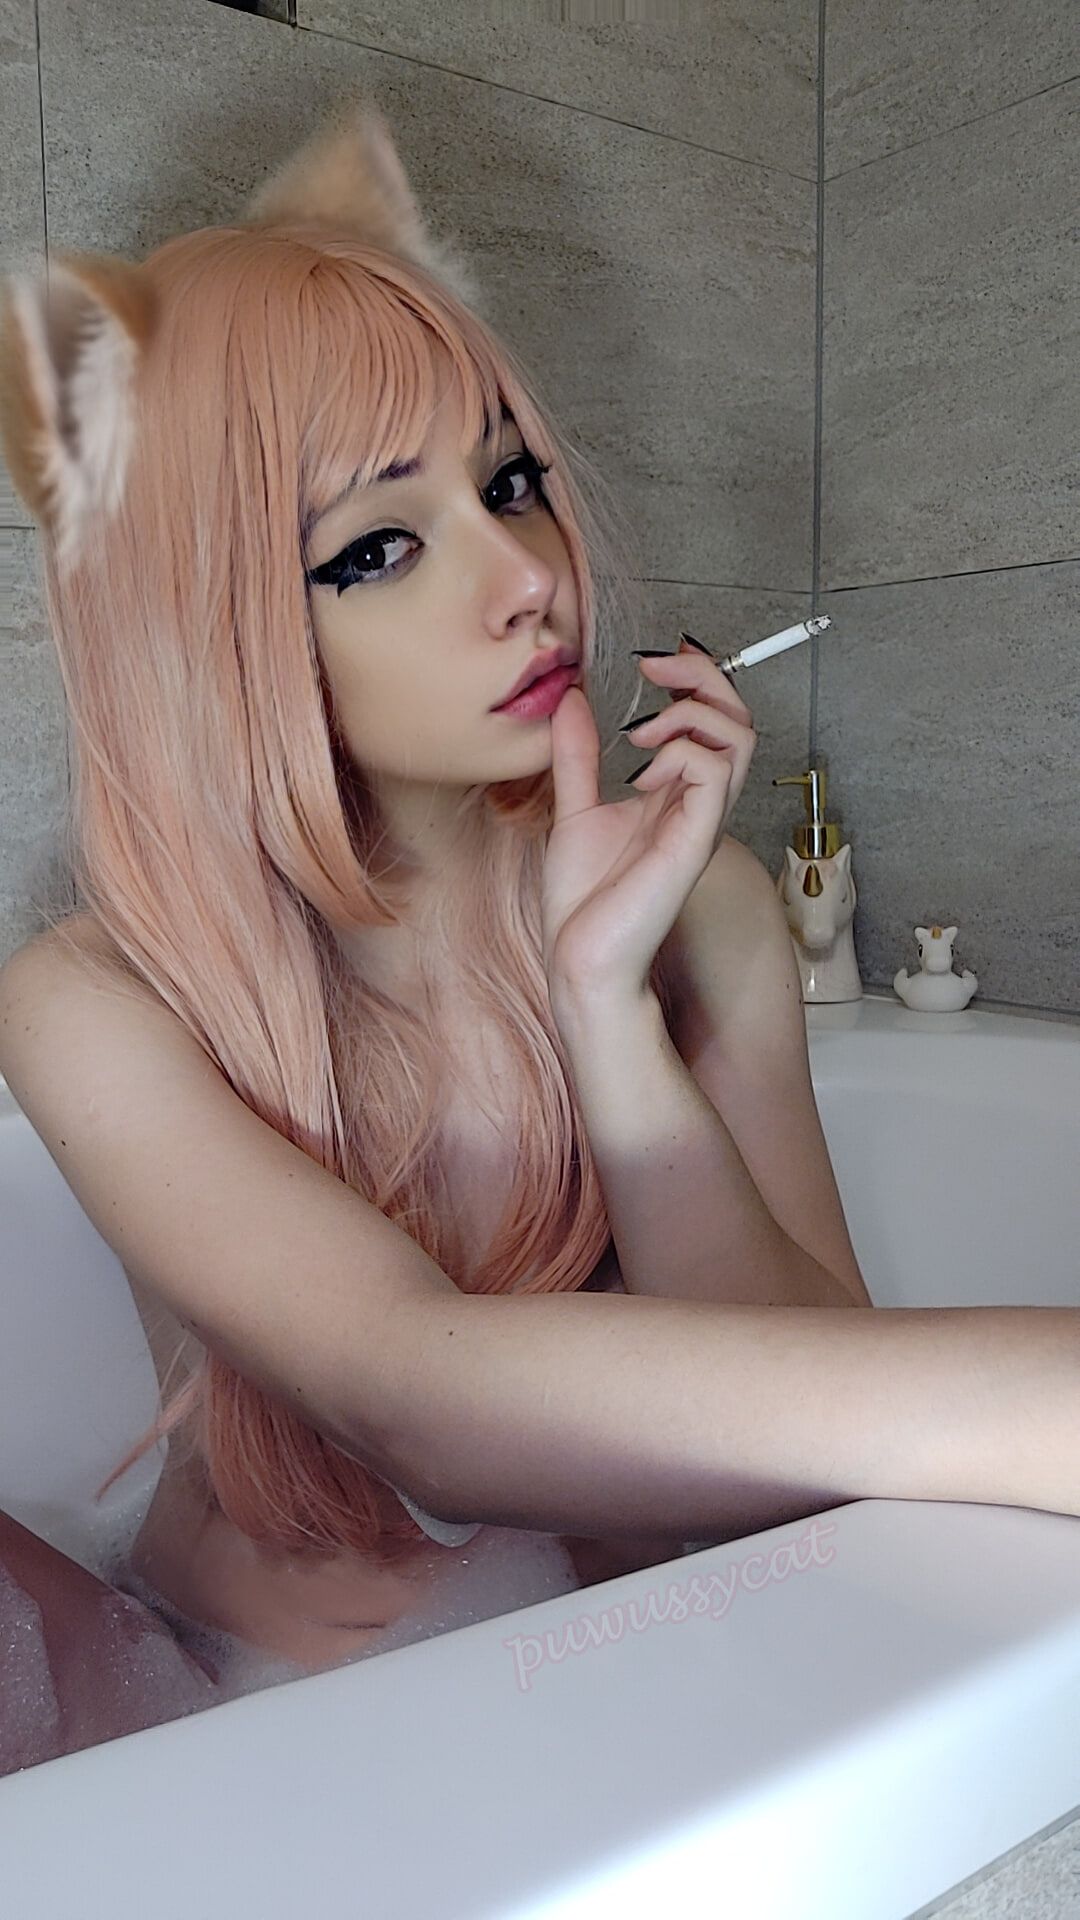 Egirl smoking in bathtub with bubbles #13